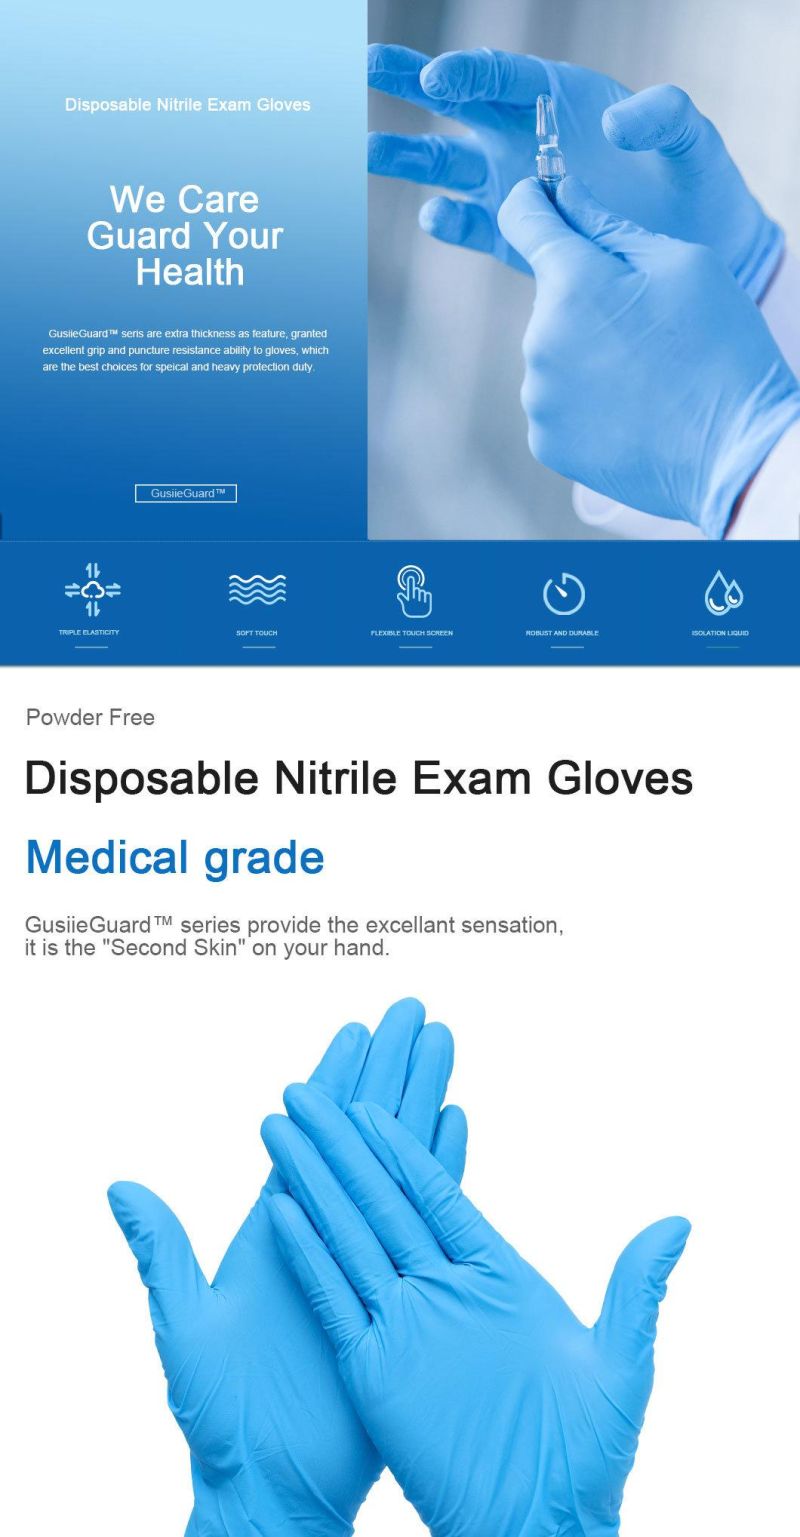 Medical Glove Disposable Non-Sterile with EU Standard Examination Glove